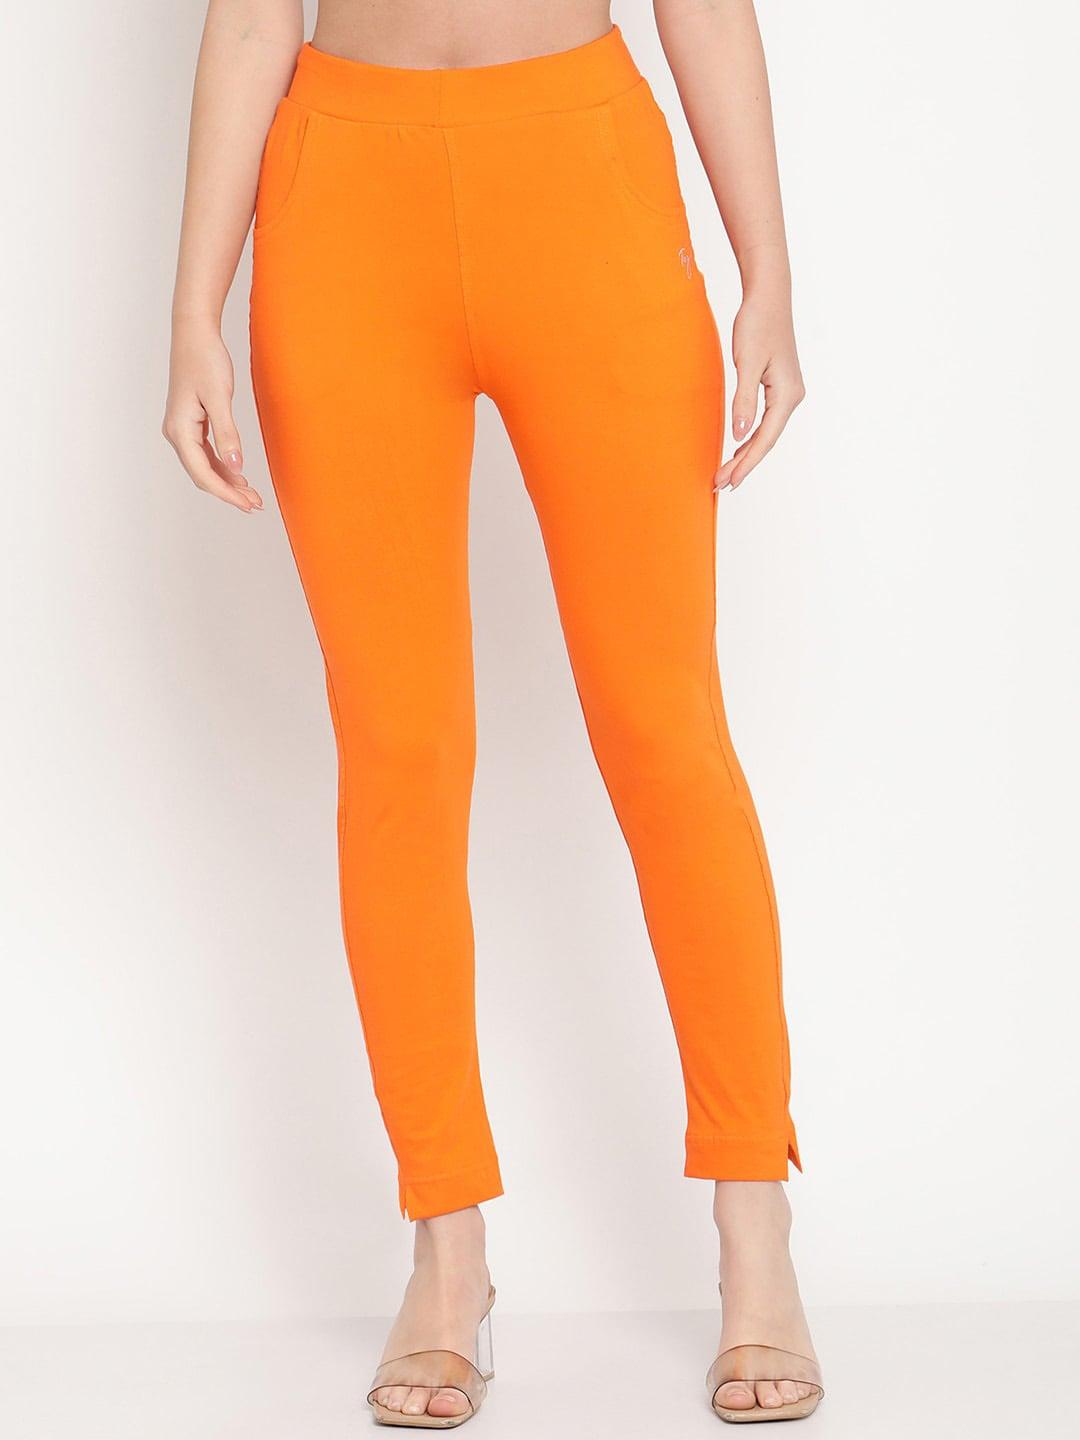 tag 7 women orange solid leggings